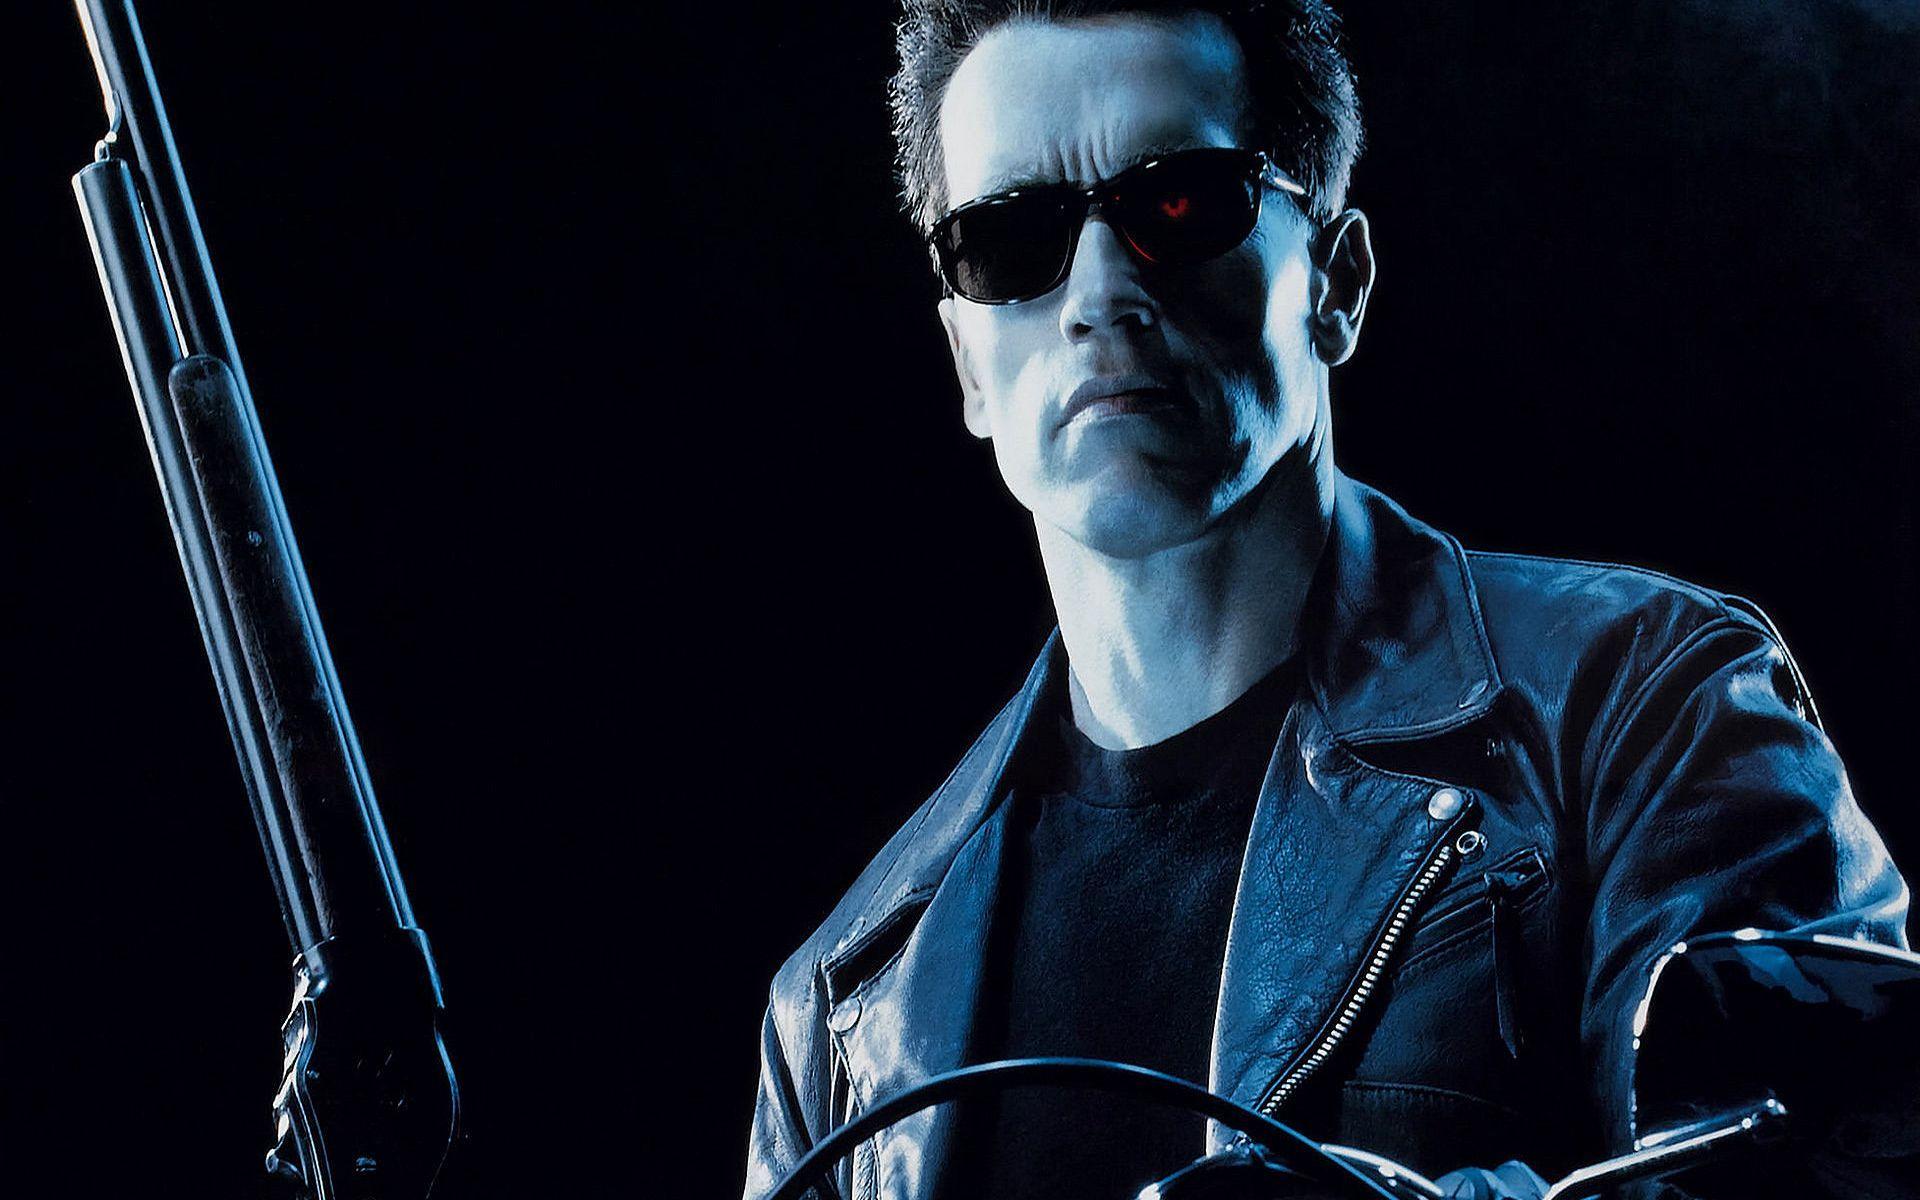 The Terminator wallpaper picture download